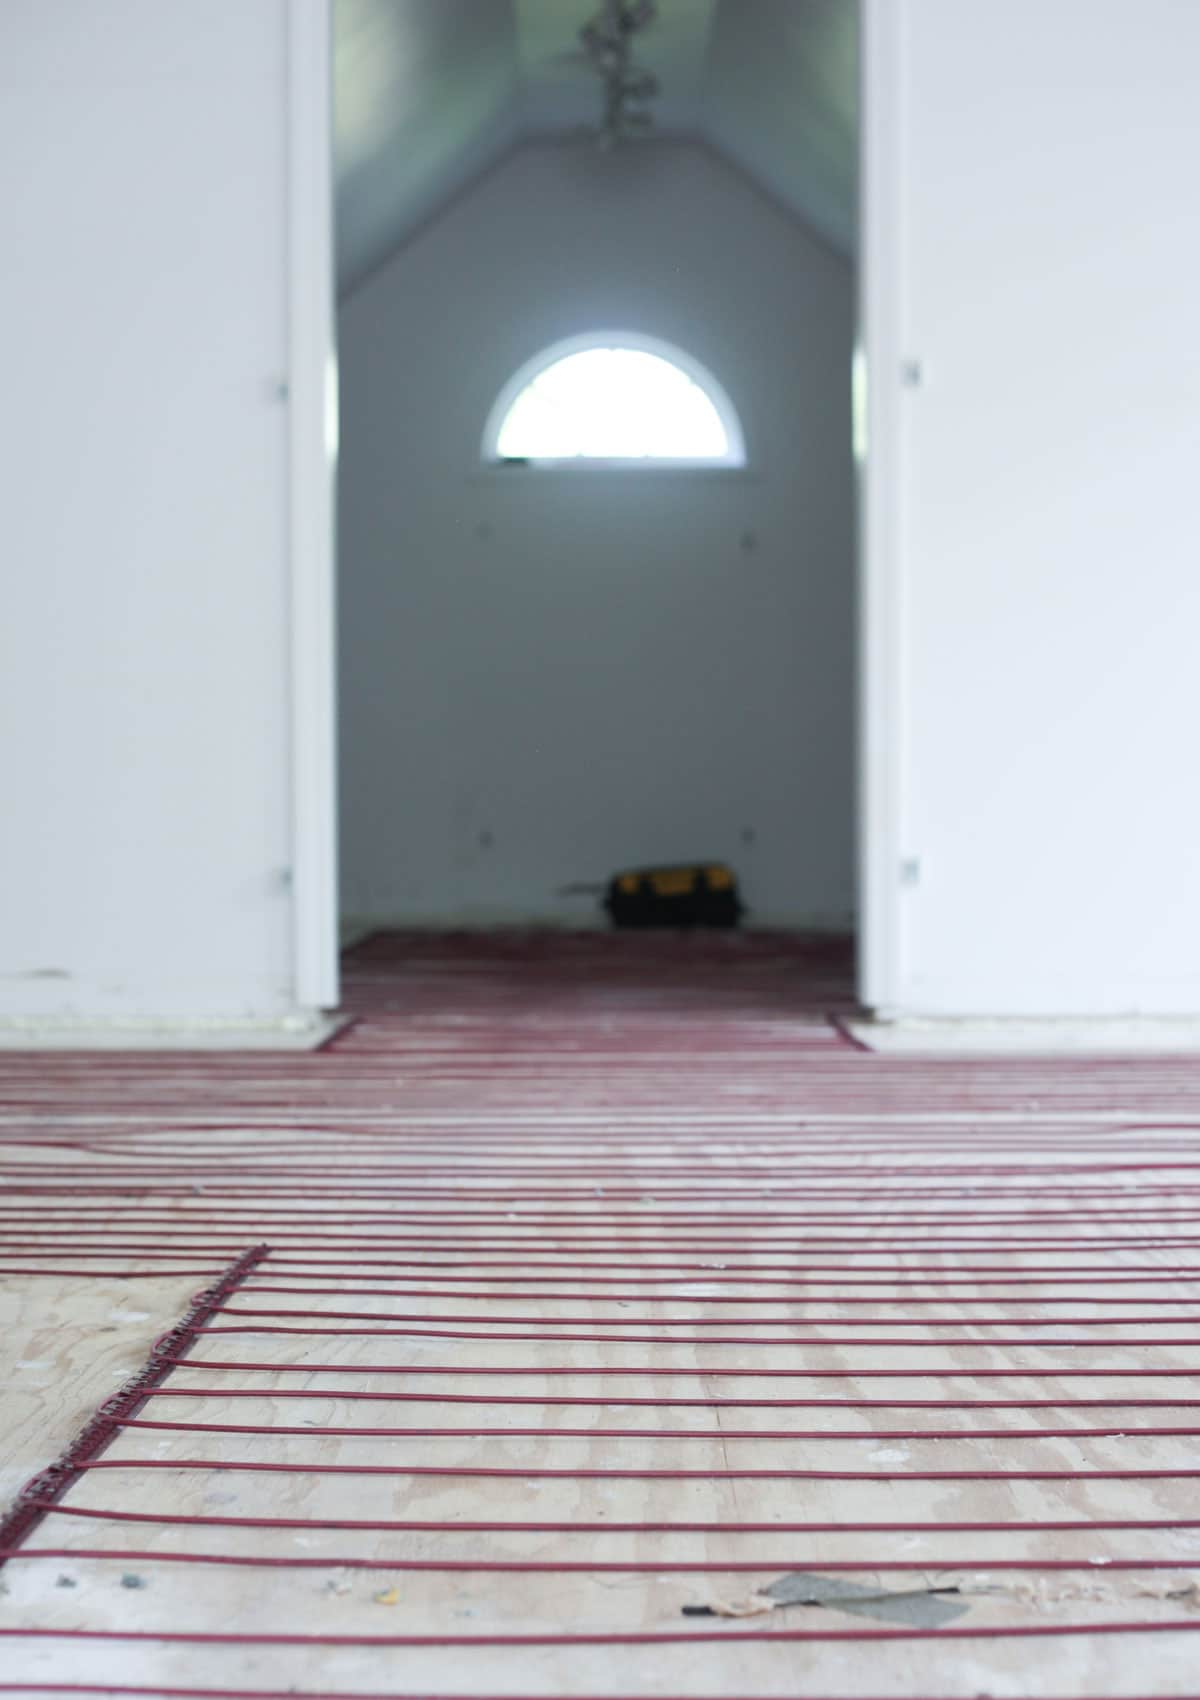 Heated floor installation from WarmlyYours radiant heat install in walk-in closet renovation